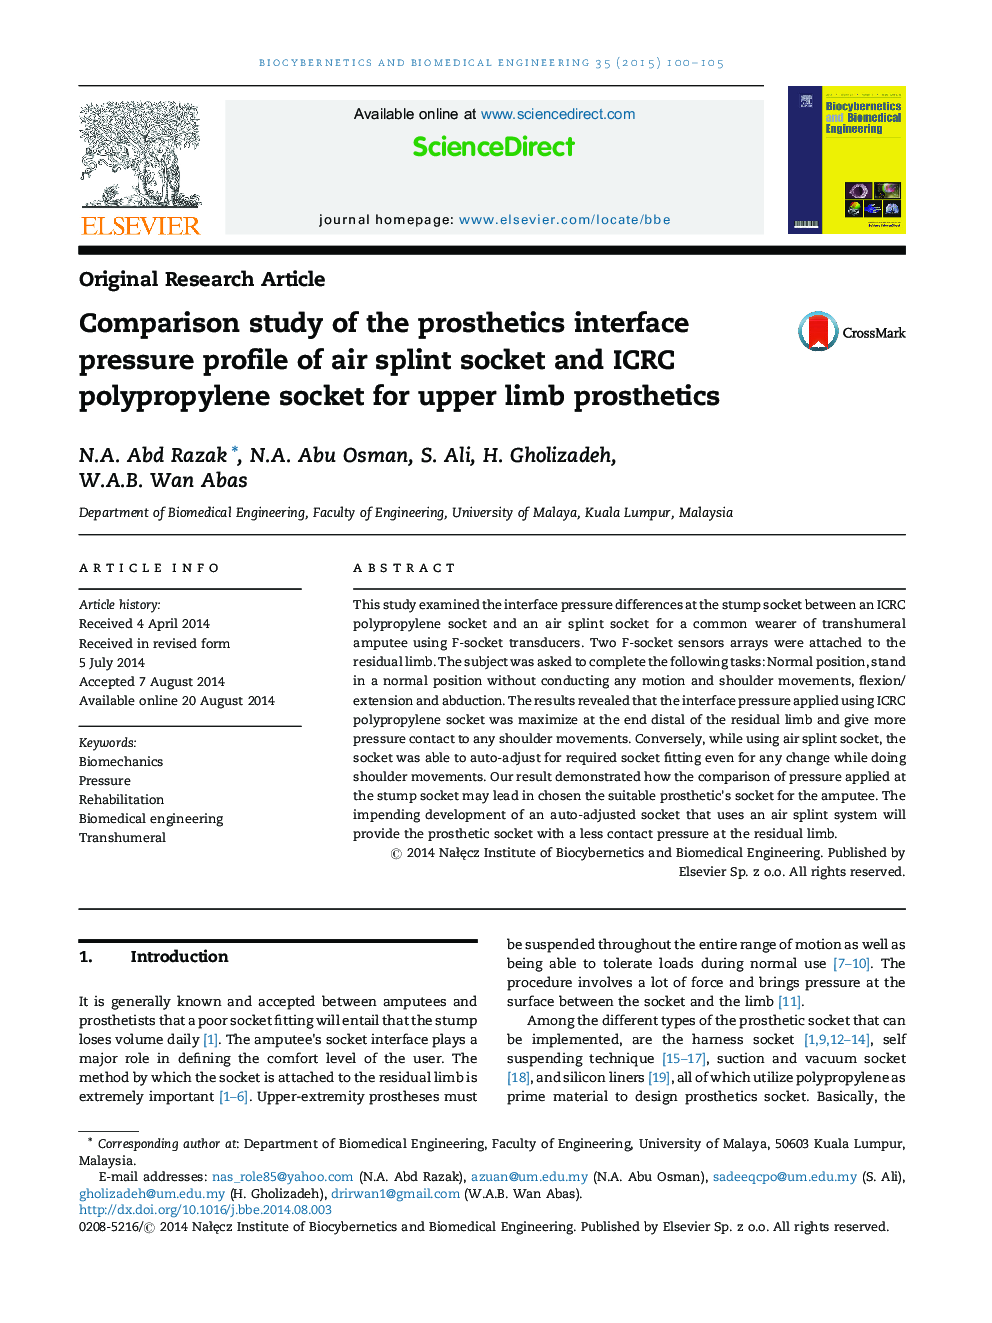 Comparison study of the prosthetics interface pressure profile of air splint socket and ICRC polypropylene socket for upper limb prosthetics